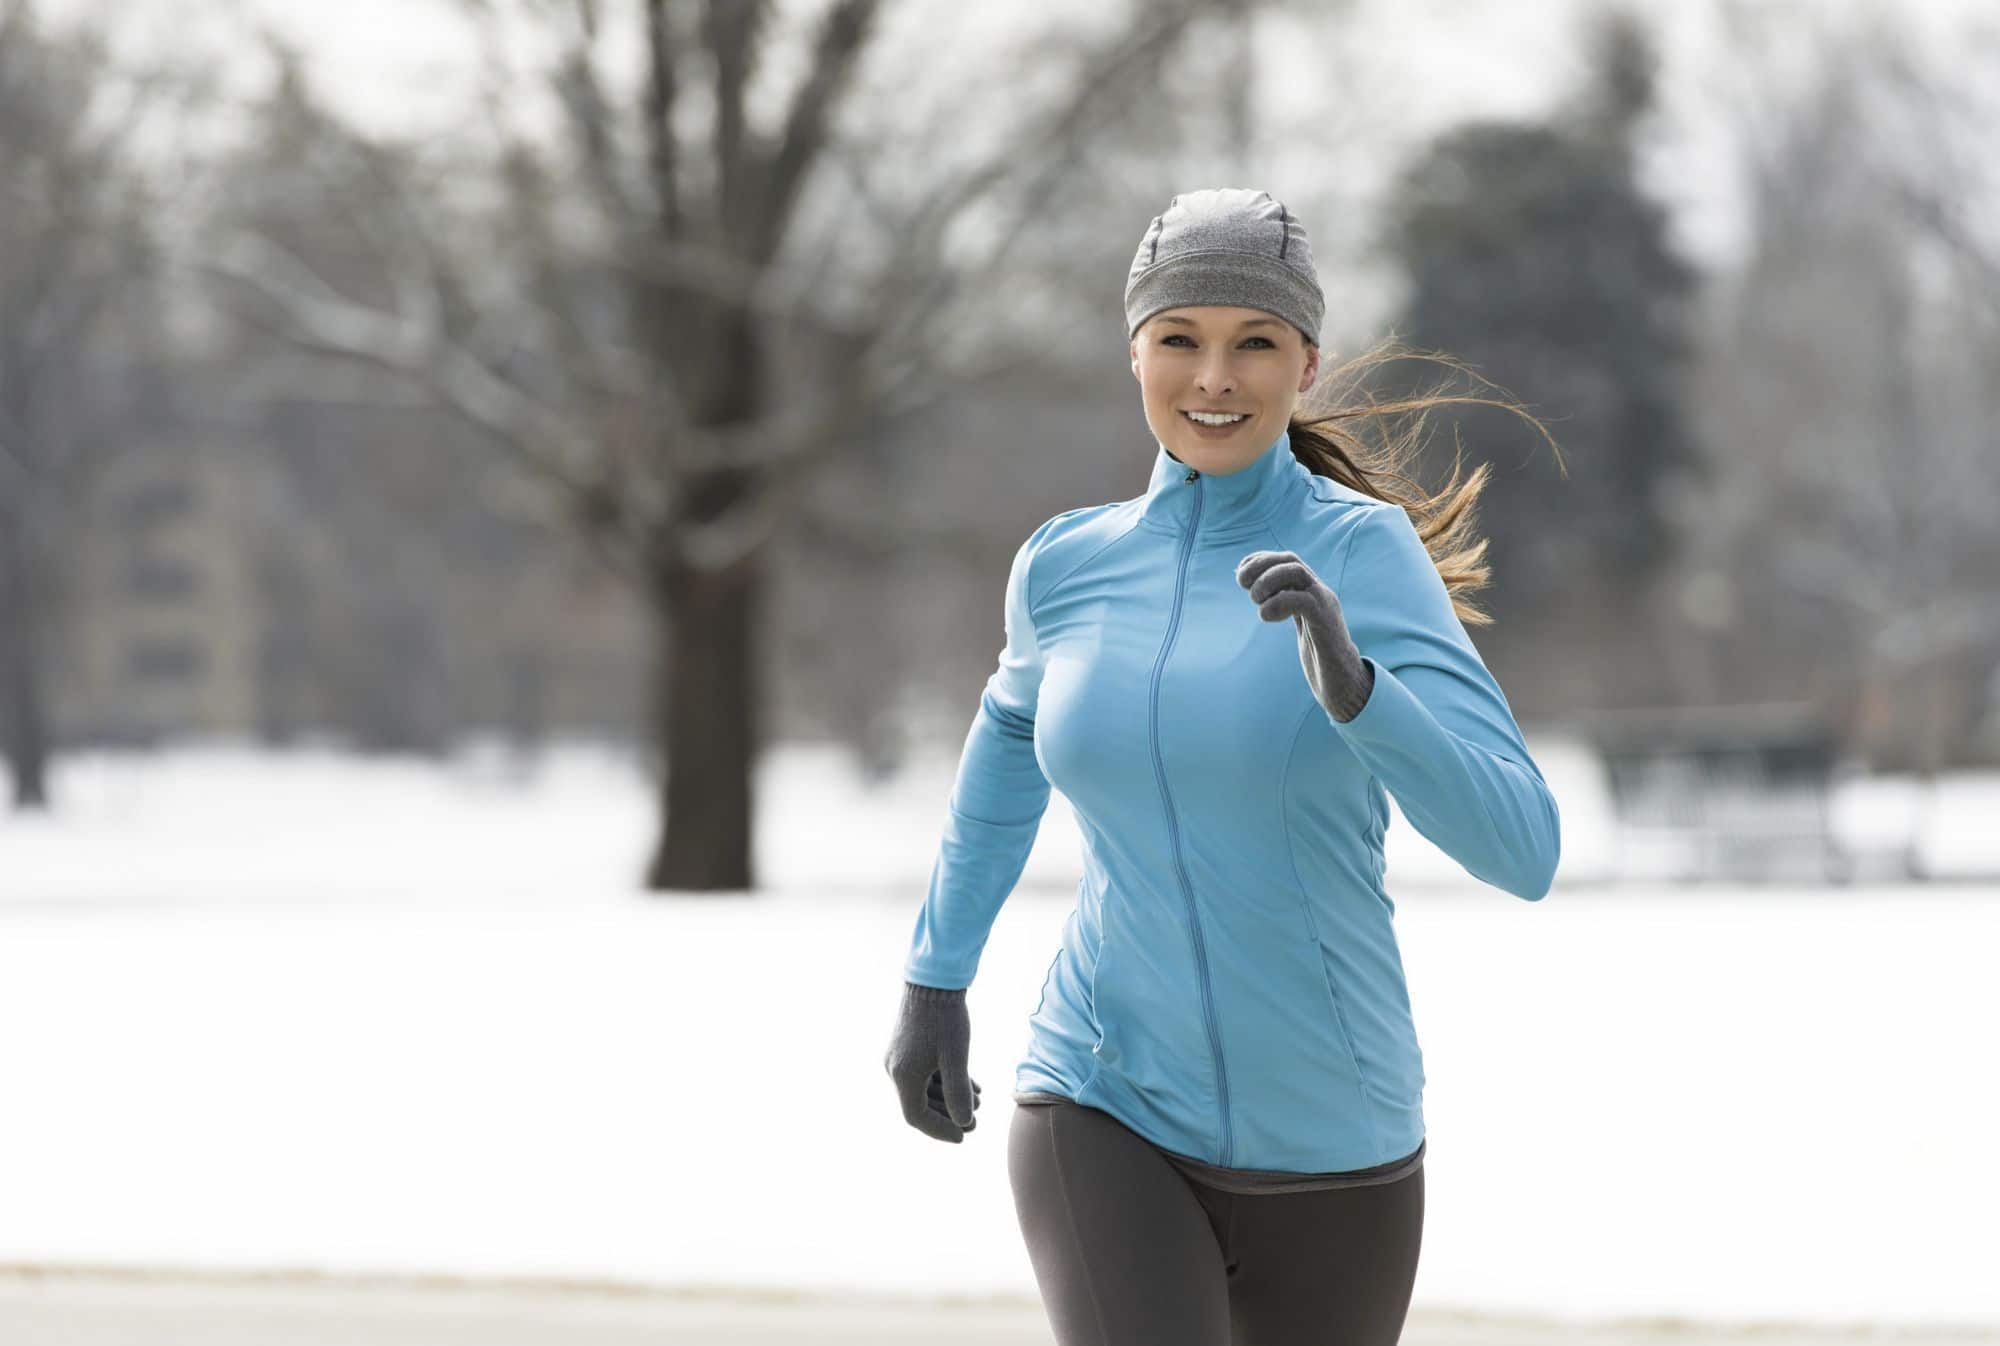 Зимние занятия спортом. Одежда для пробежки. Зимний бег. Одежда для зимней пробежки. Бег зимой.